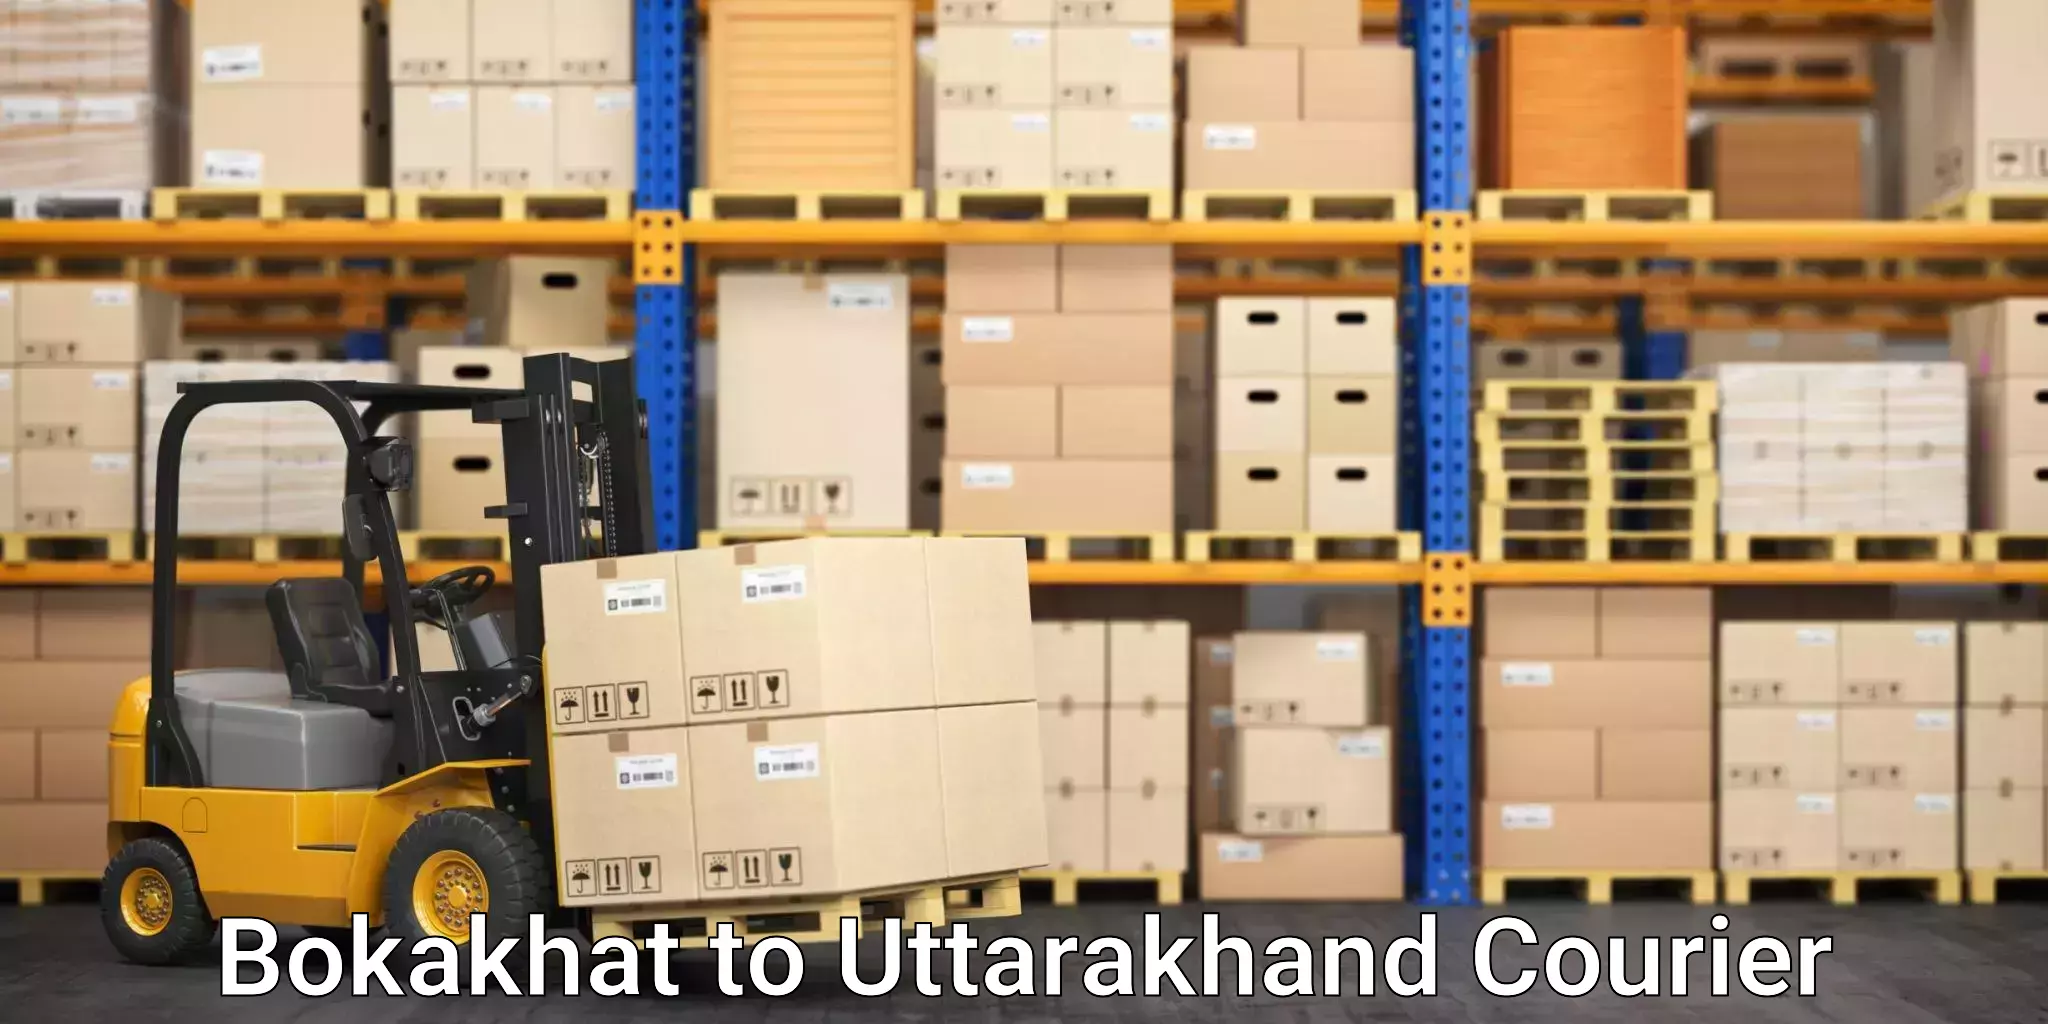 Customized shipping options in Bokakhat to Ramnagar